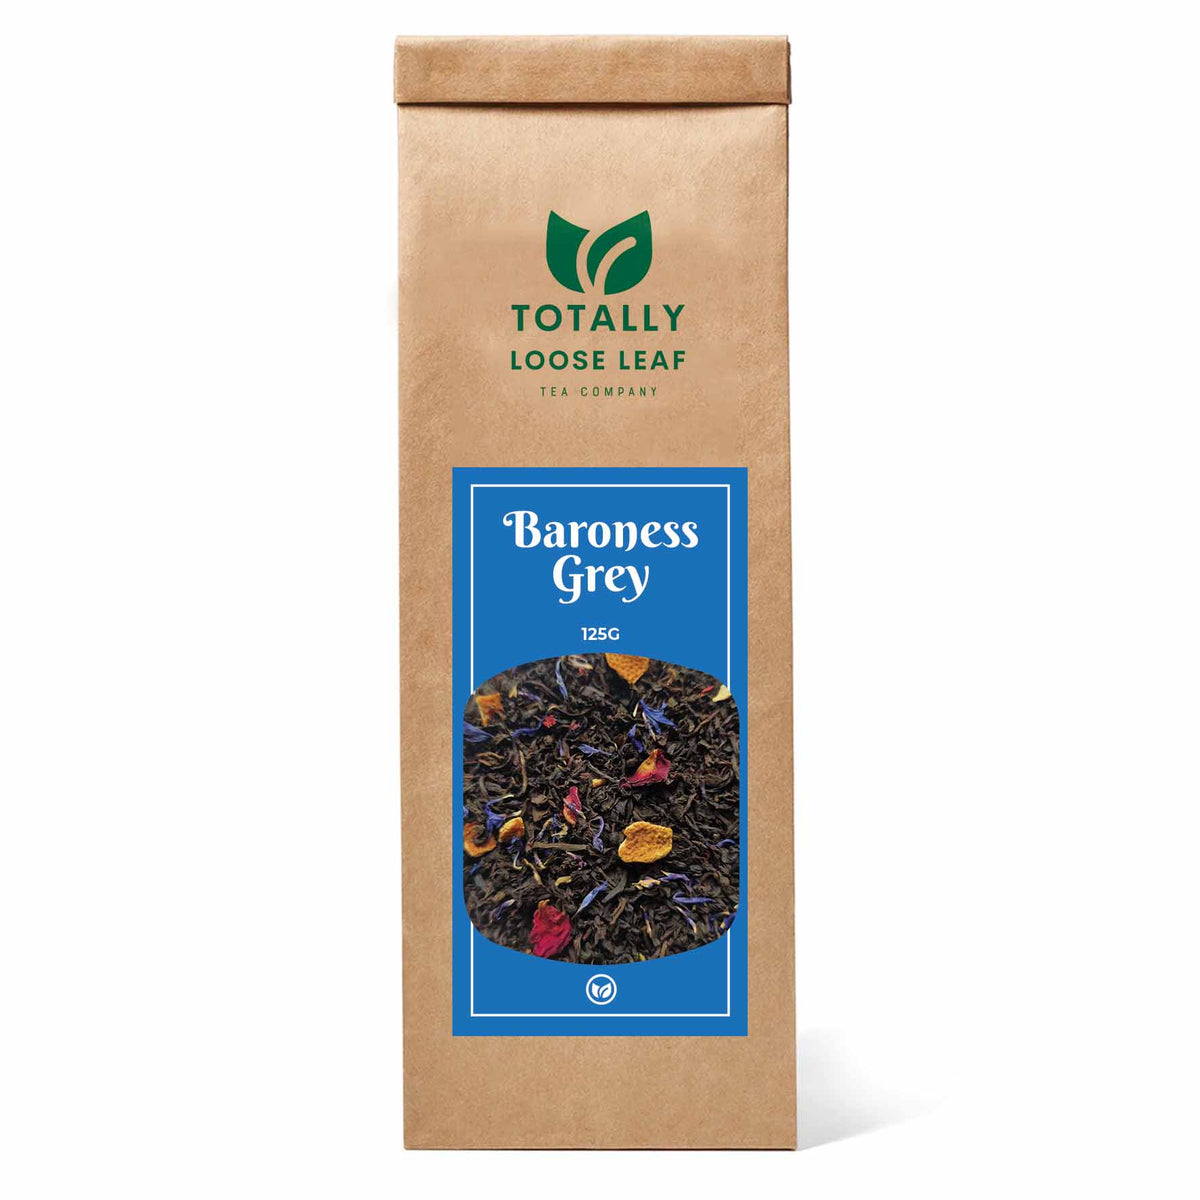 Baroness Grey Breakfast Loose Leaf Tea - one pouch